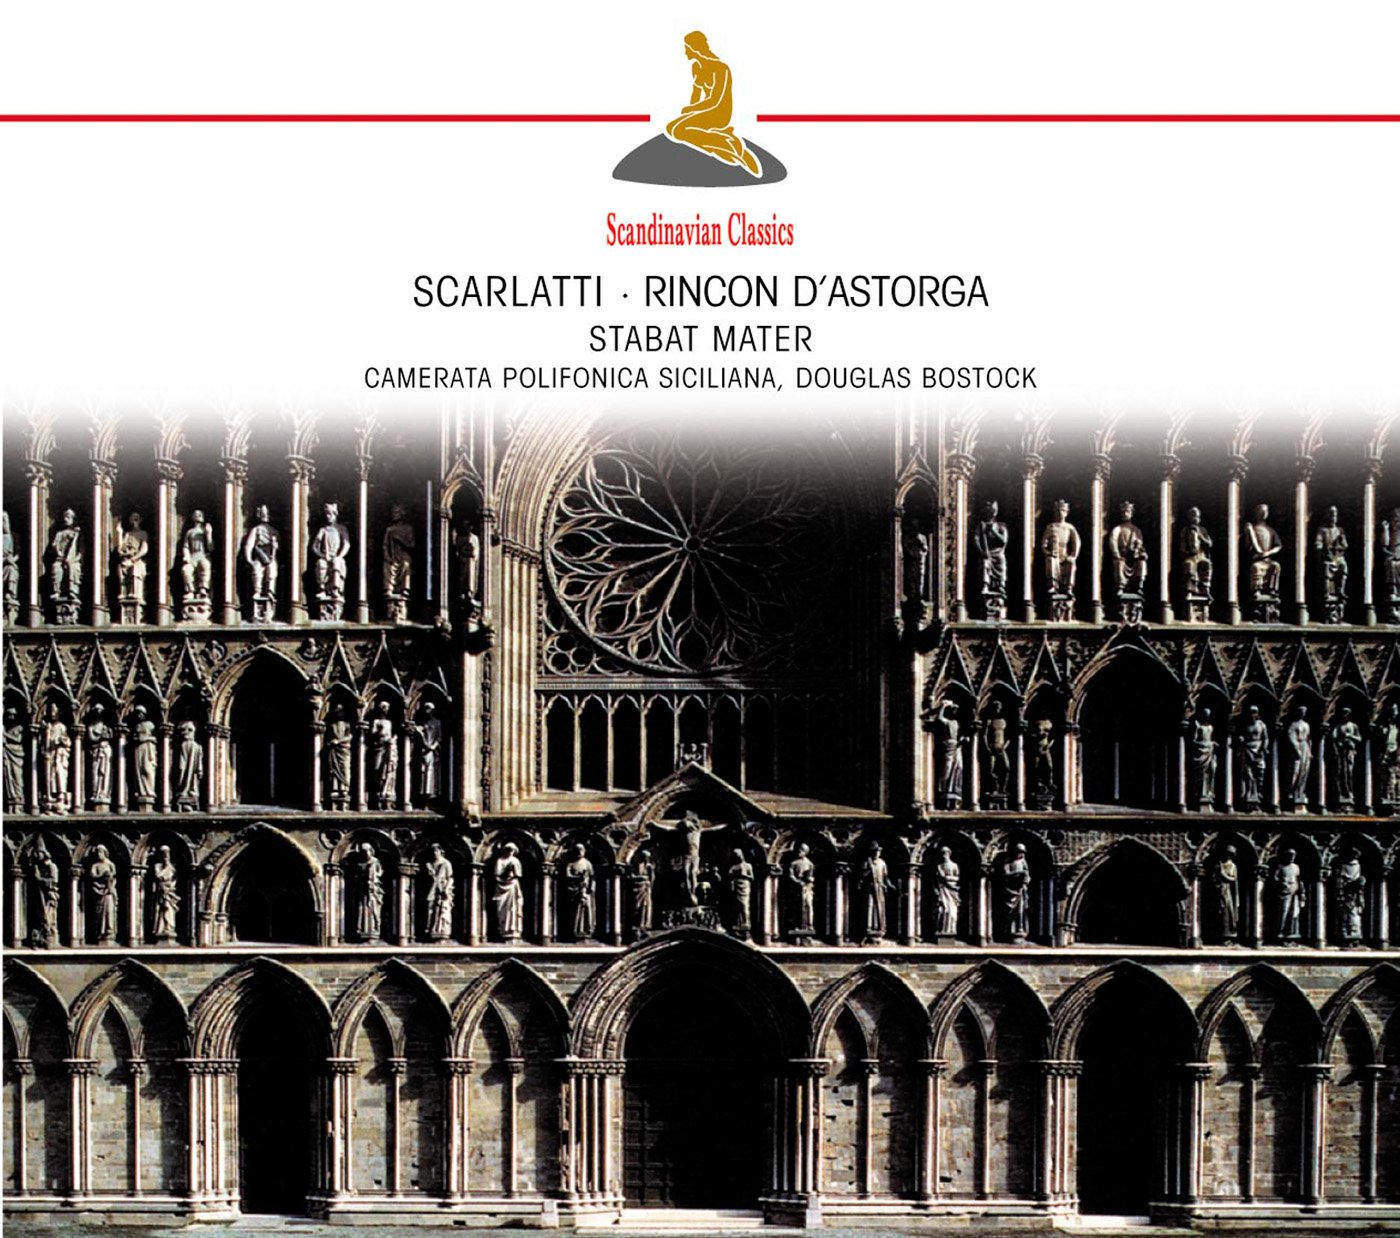 SCARLATTI & D'ASTORGA: Stabat Mater - Camerata Polifonica Siciliana, Douglas Bostock